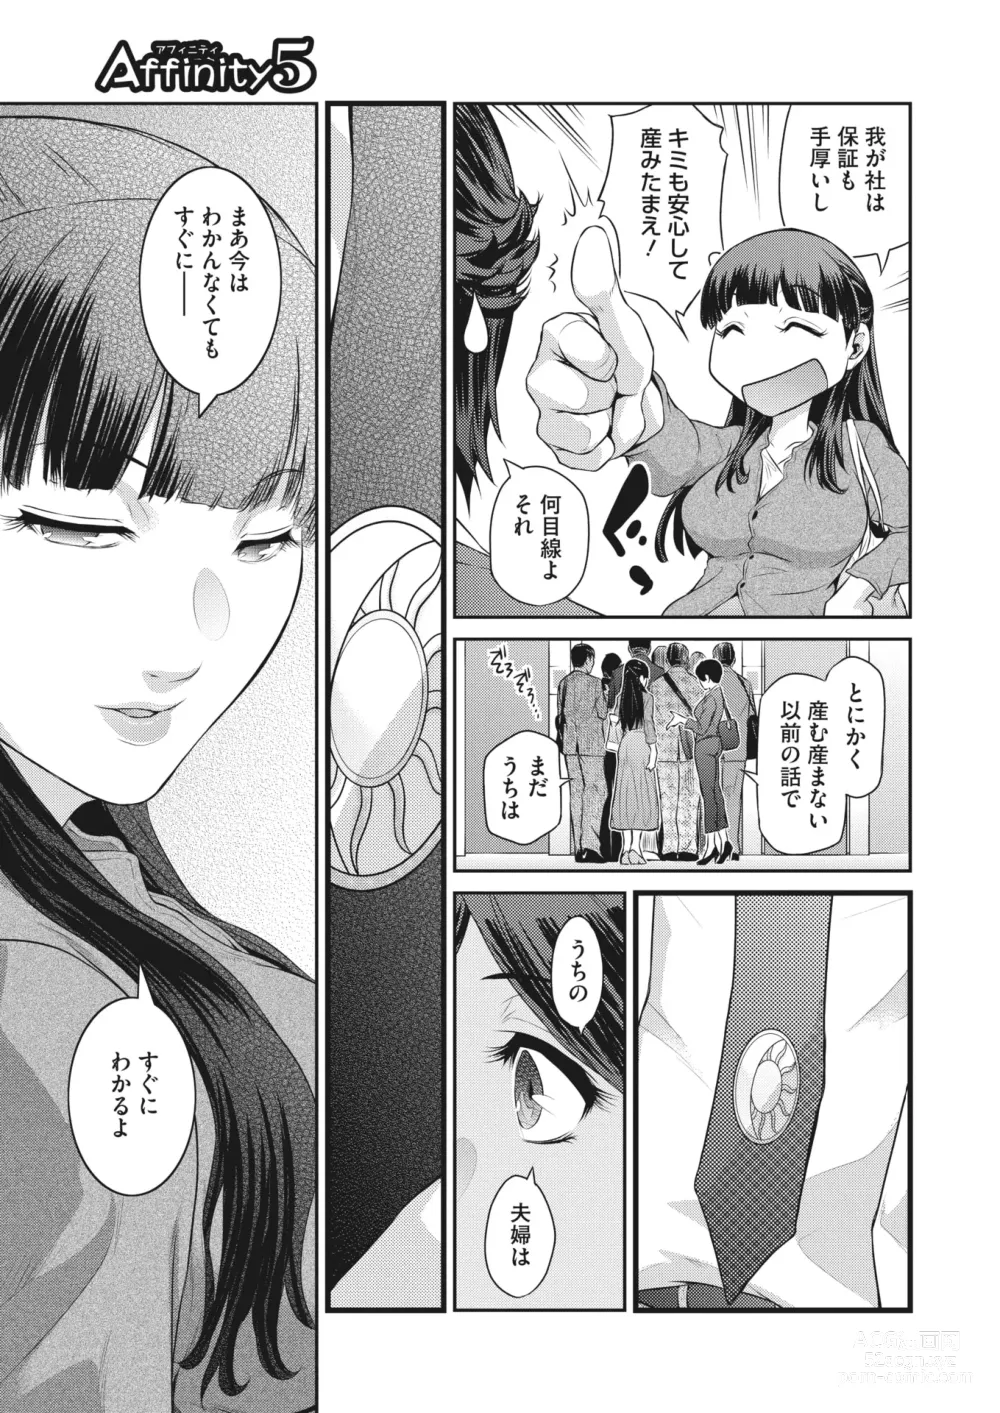 Page 93 of manga Affinity Ch.1-5